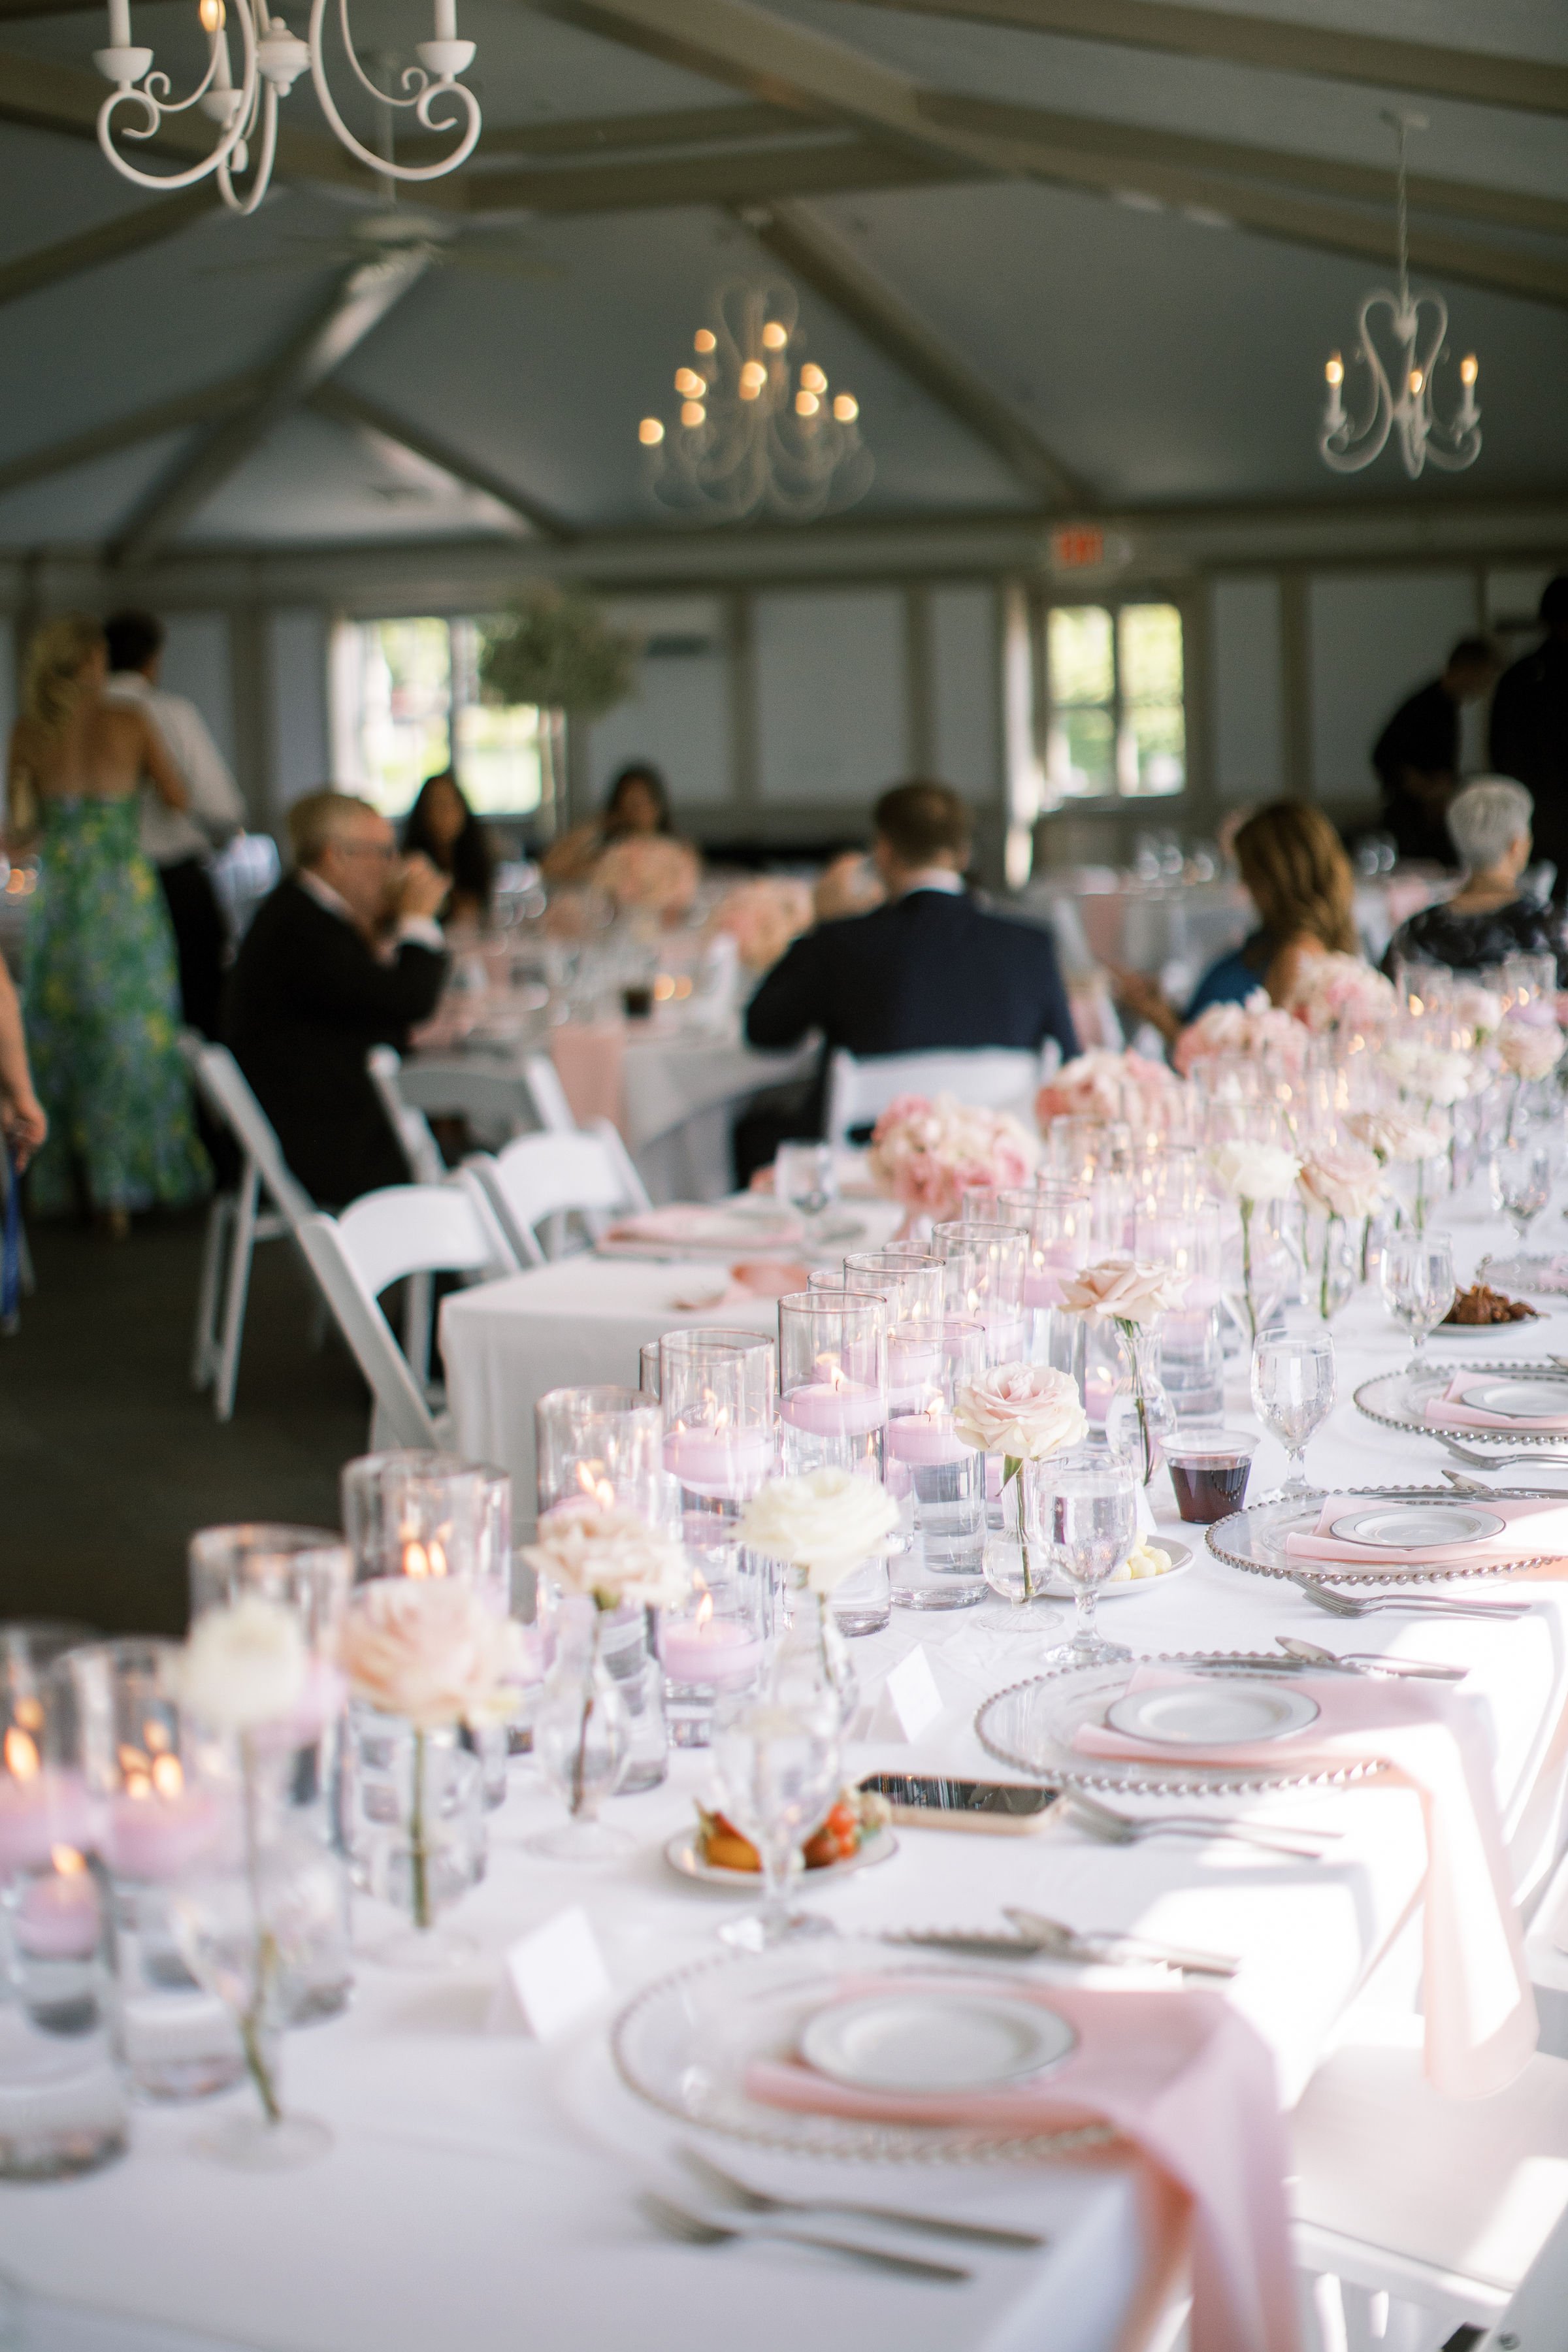 Rosenbaum+Wedding+Reception+Details-80.jpg